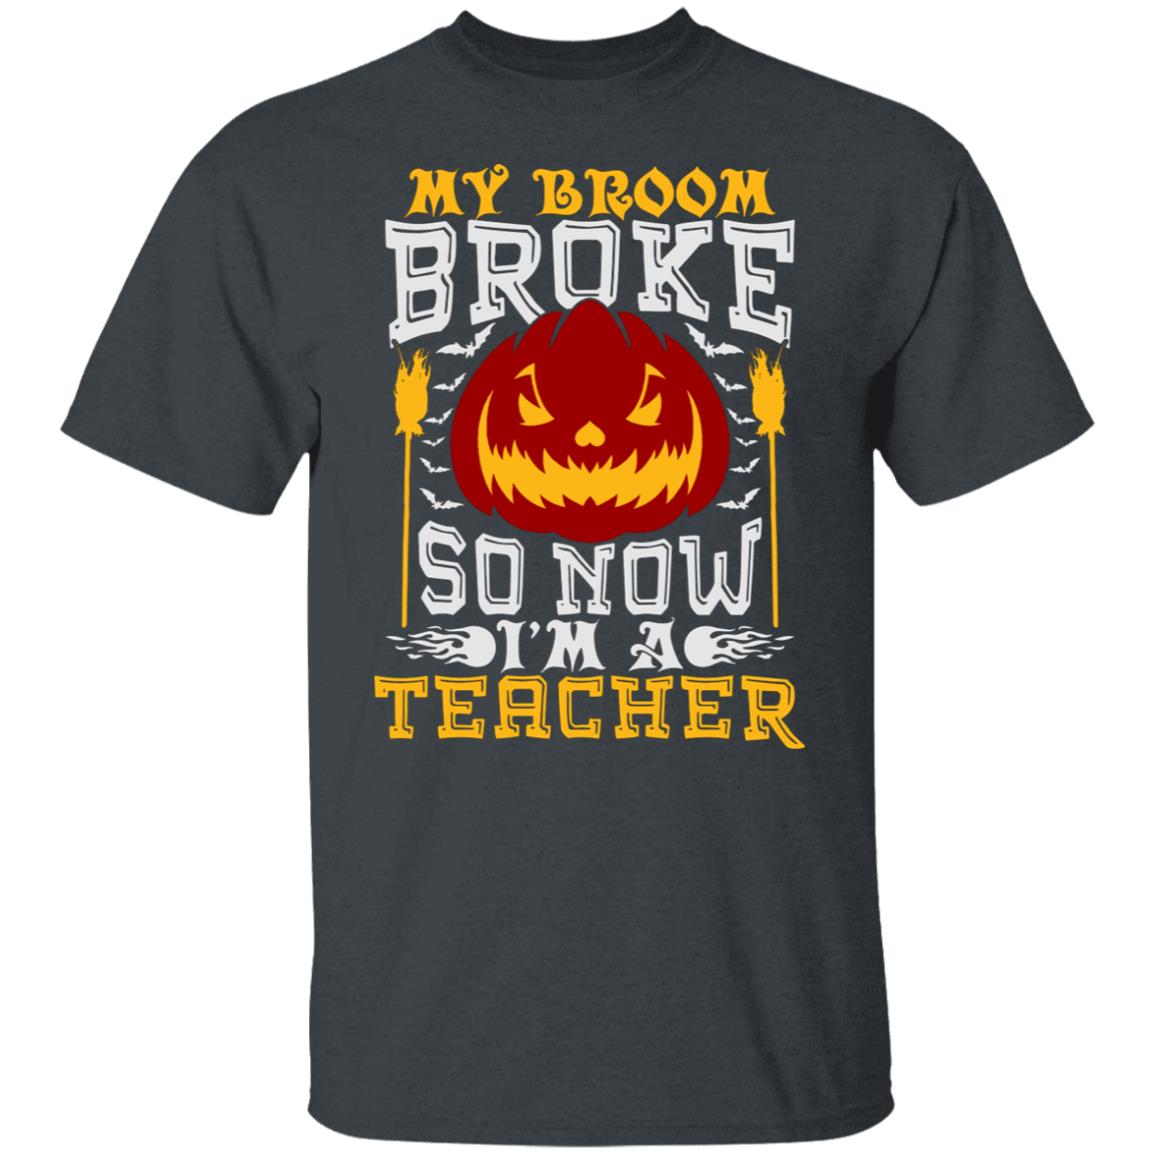 My Broom Broke So Now I'm a Teacher Funny Shirt